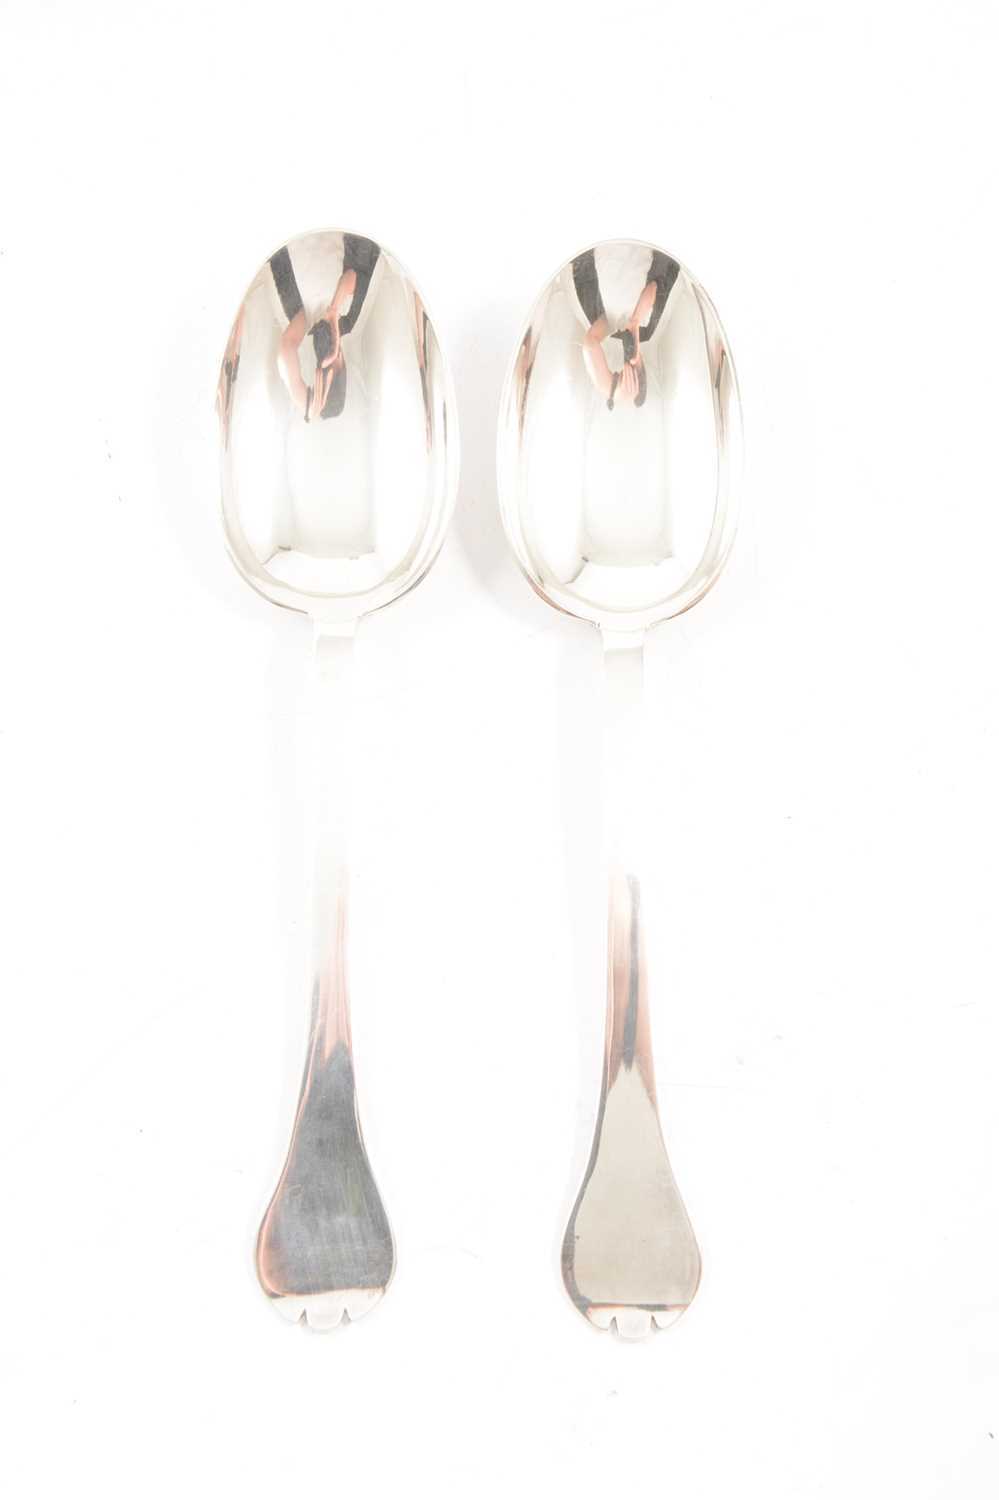 Pair of Britannia standard silver spoons, Thomas Bradbury & Sons Ltd, London 1912. - Image 2 of 5